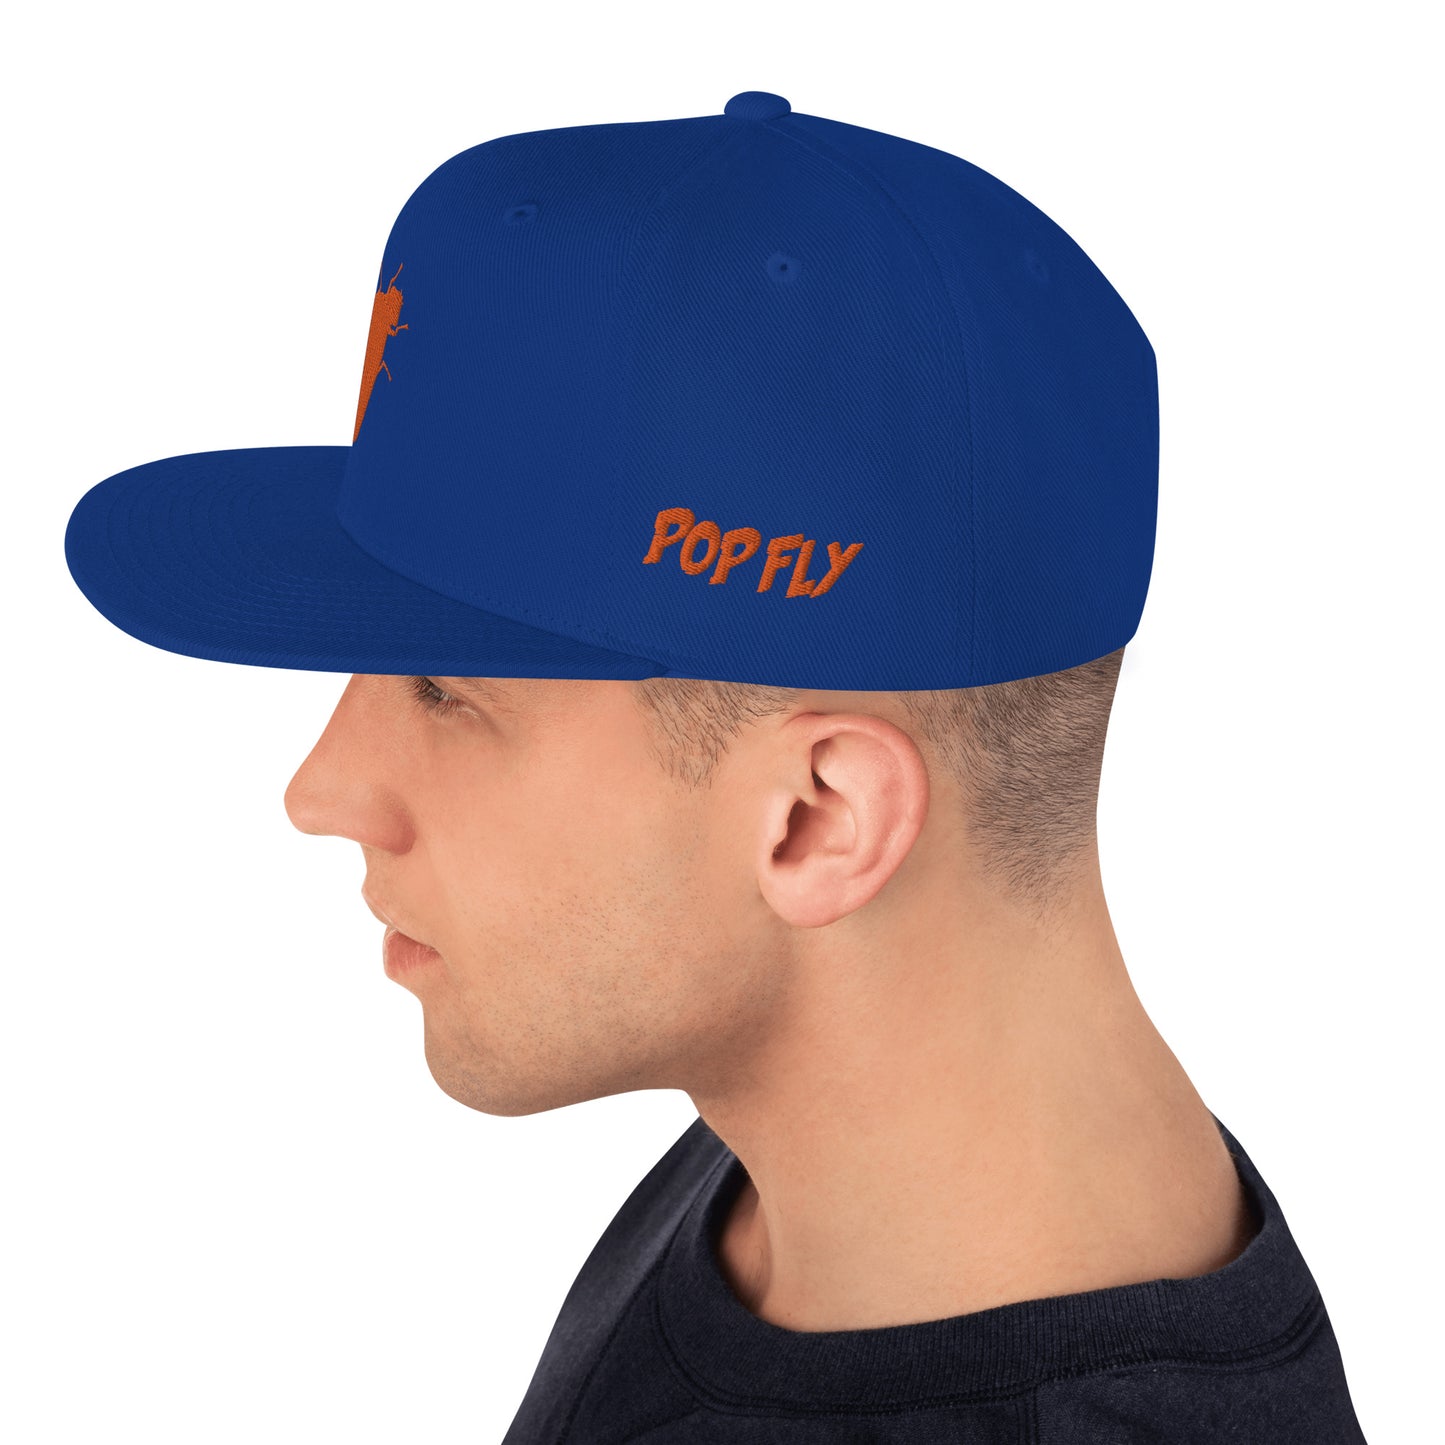 Amazin' Pop Fly Hat